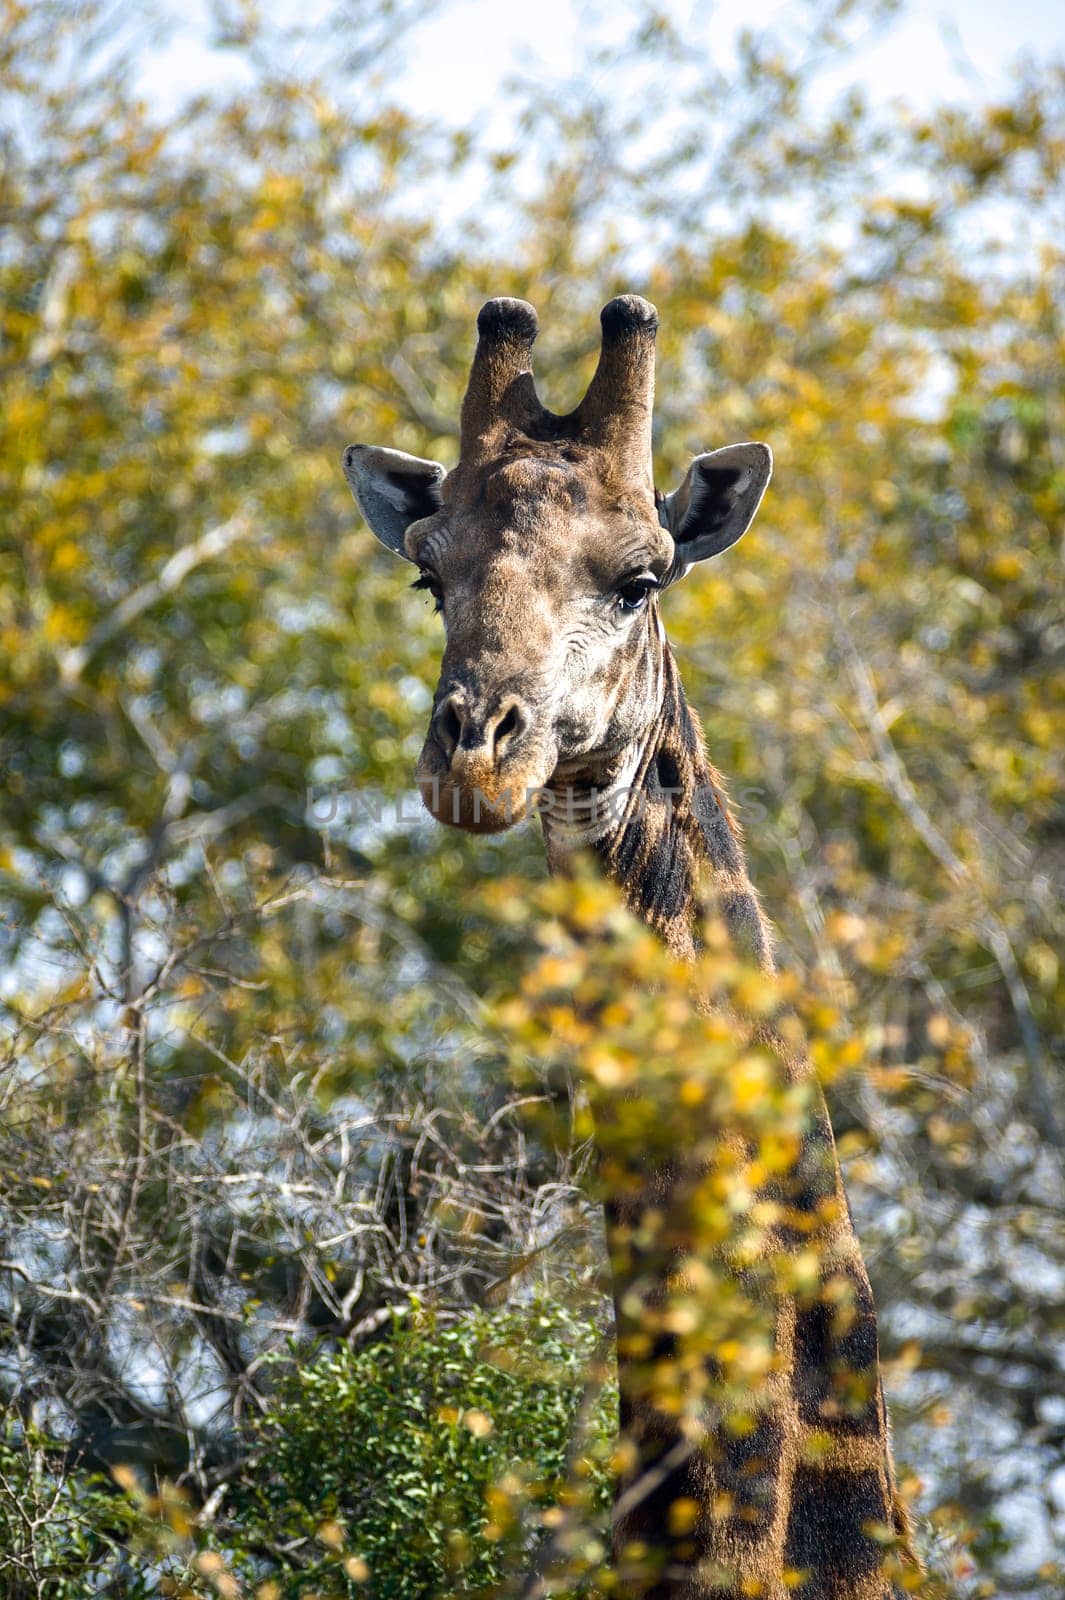 Giraffe by Giamplume